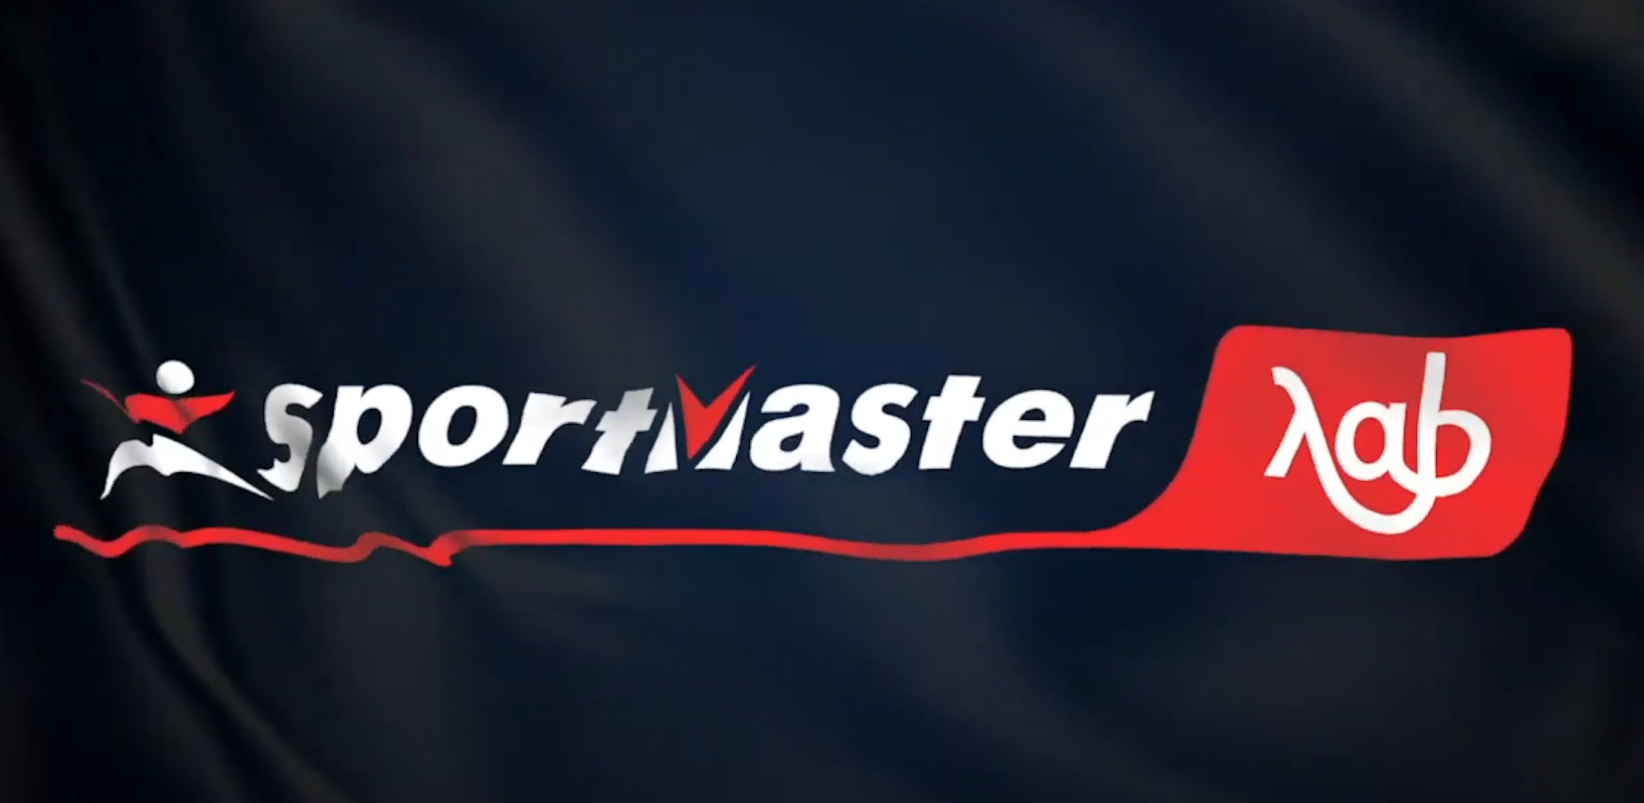 Sportmaster mail. Спортмастер Лаб. Спортмастер логотип. Офис Спортмастер Labs. Sportmaster Lab офис.